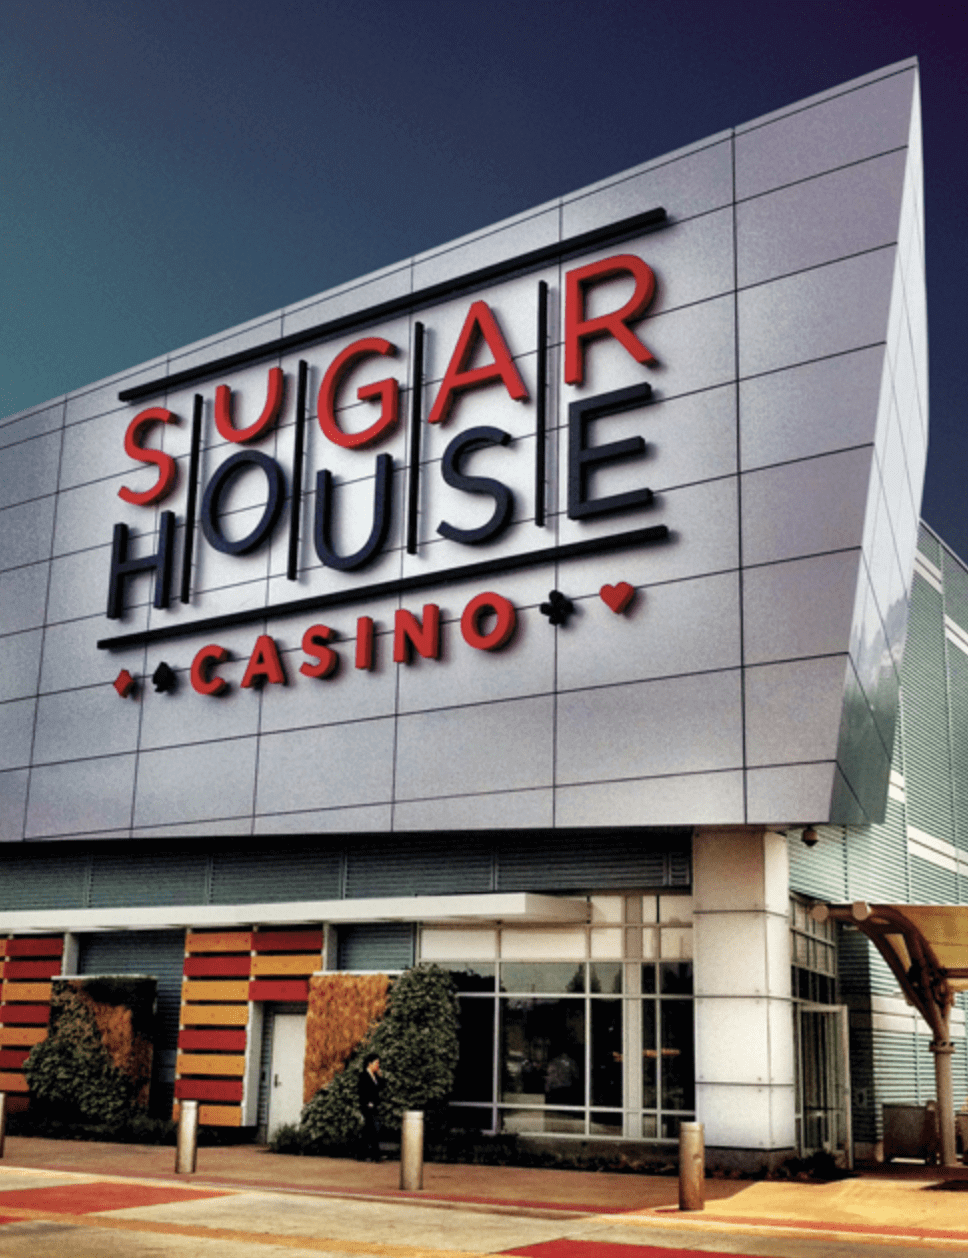 is the sugarhouse casino open